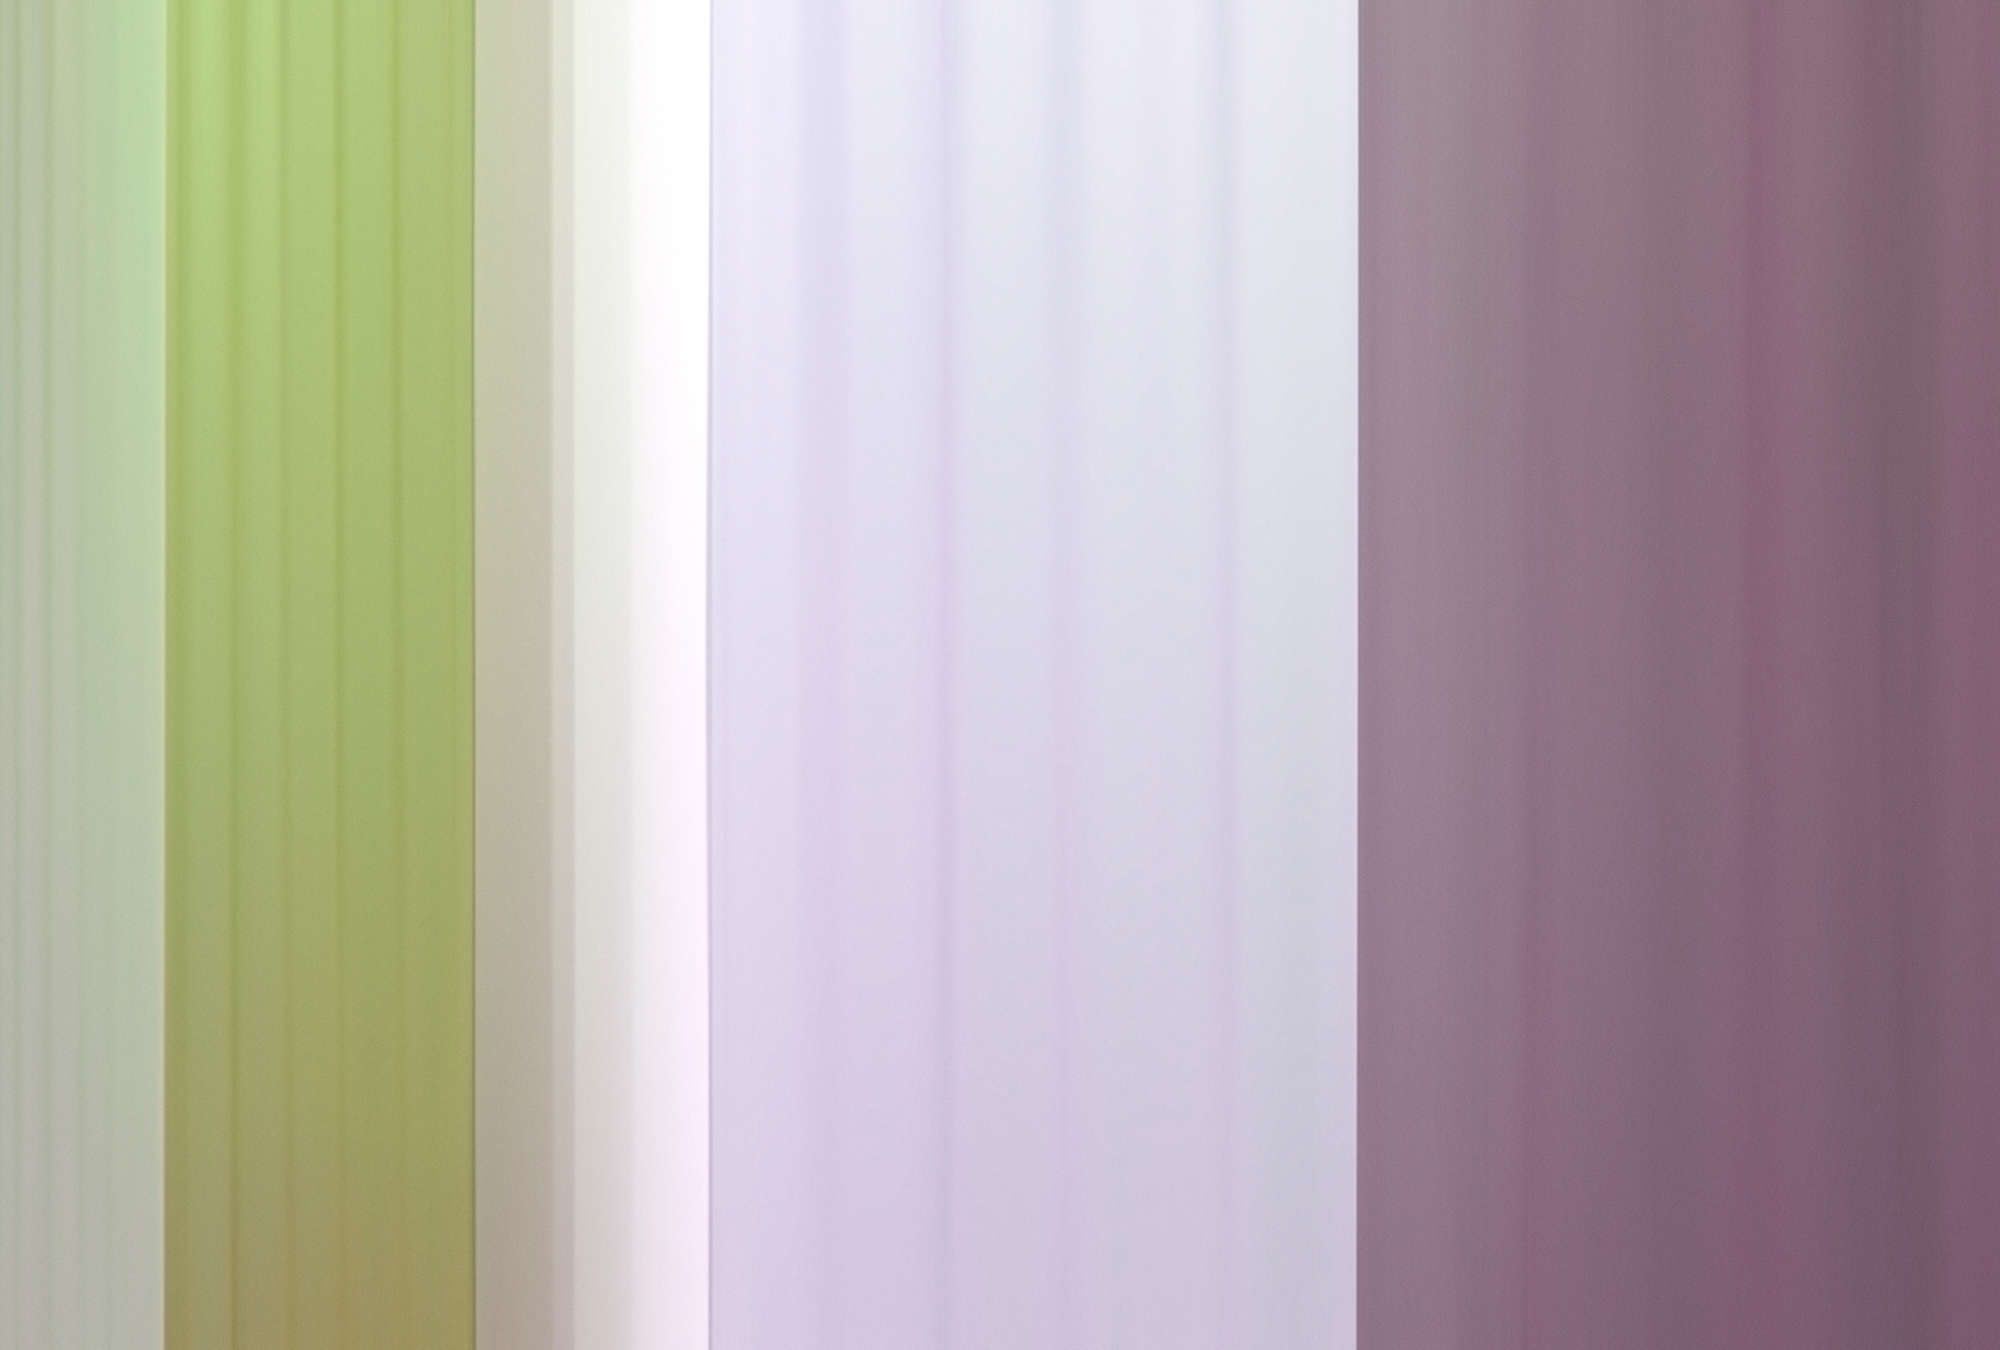             Fotomural »co-colores 3« - degradado de color con rayas - verde, lila, morado | no tejido, liso, mate
        